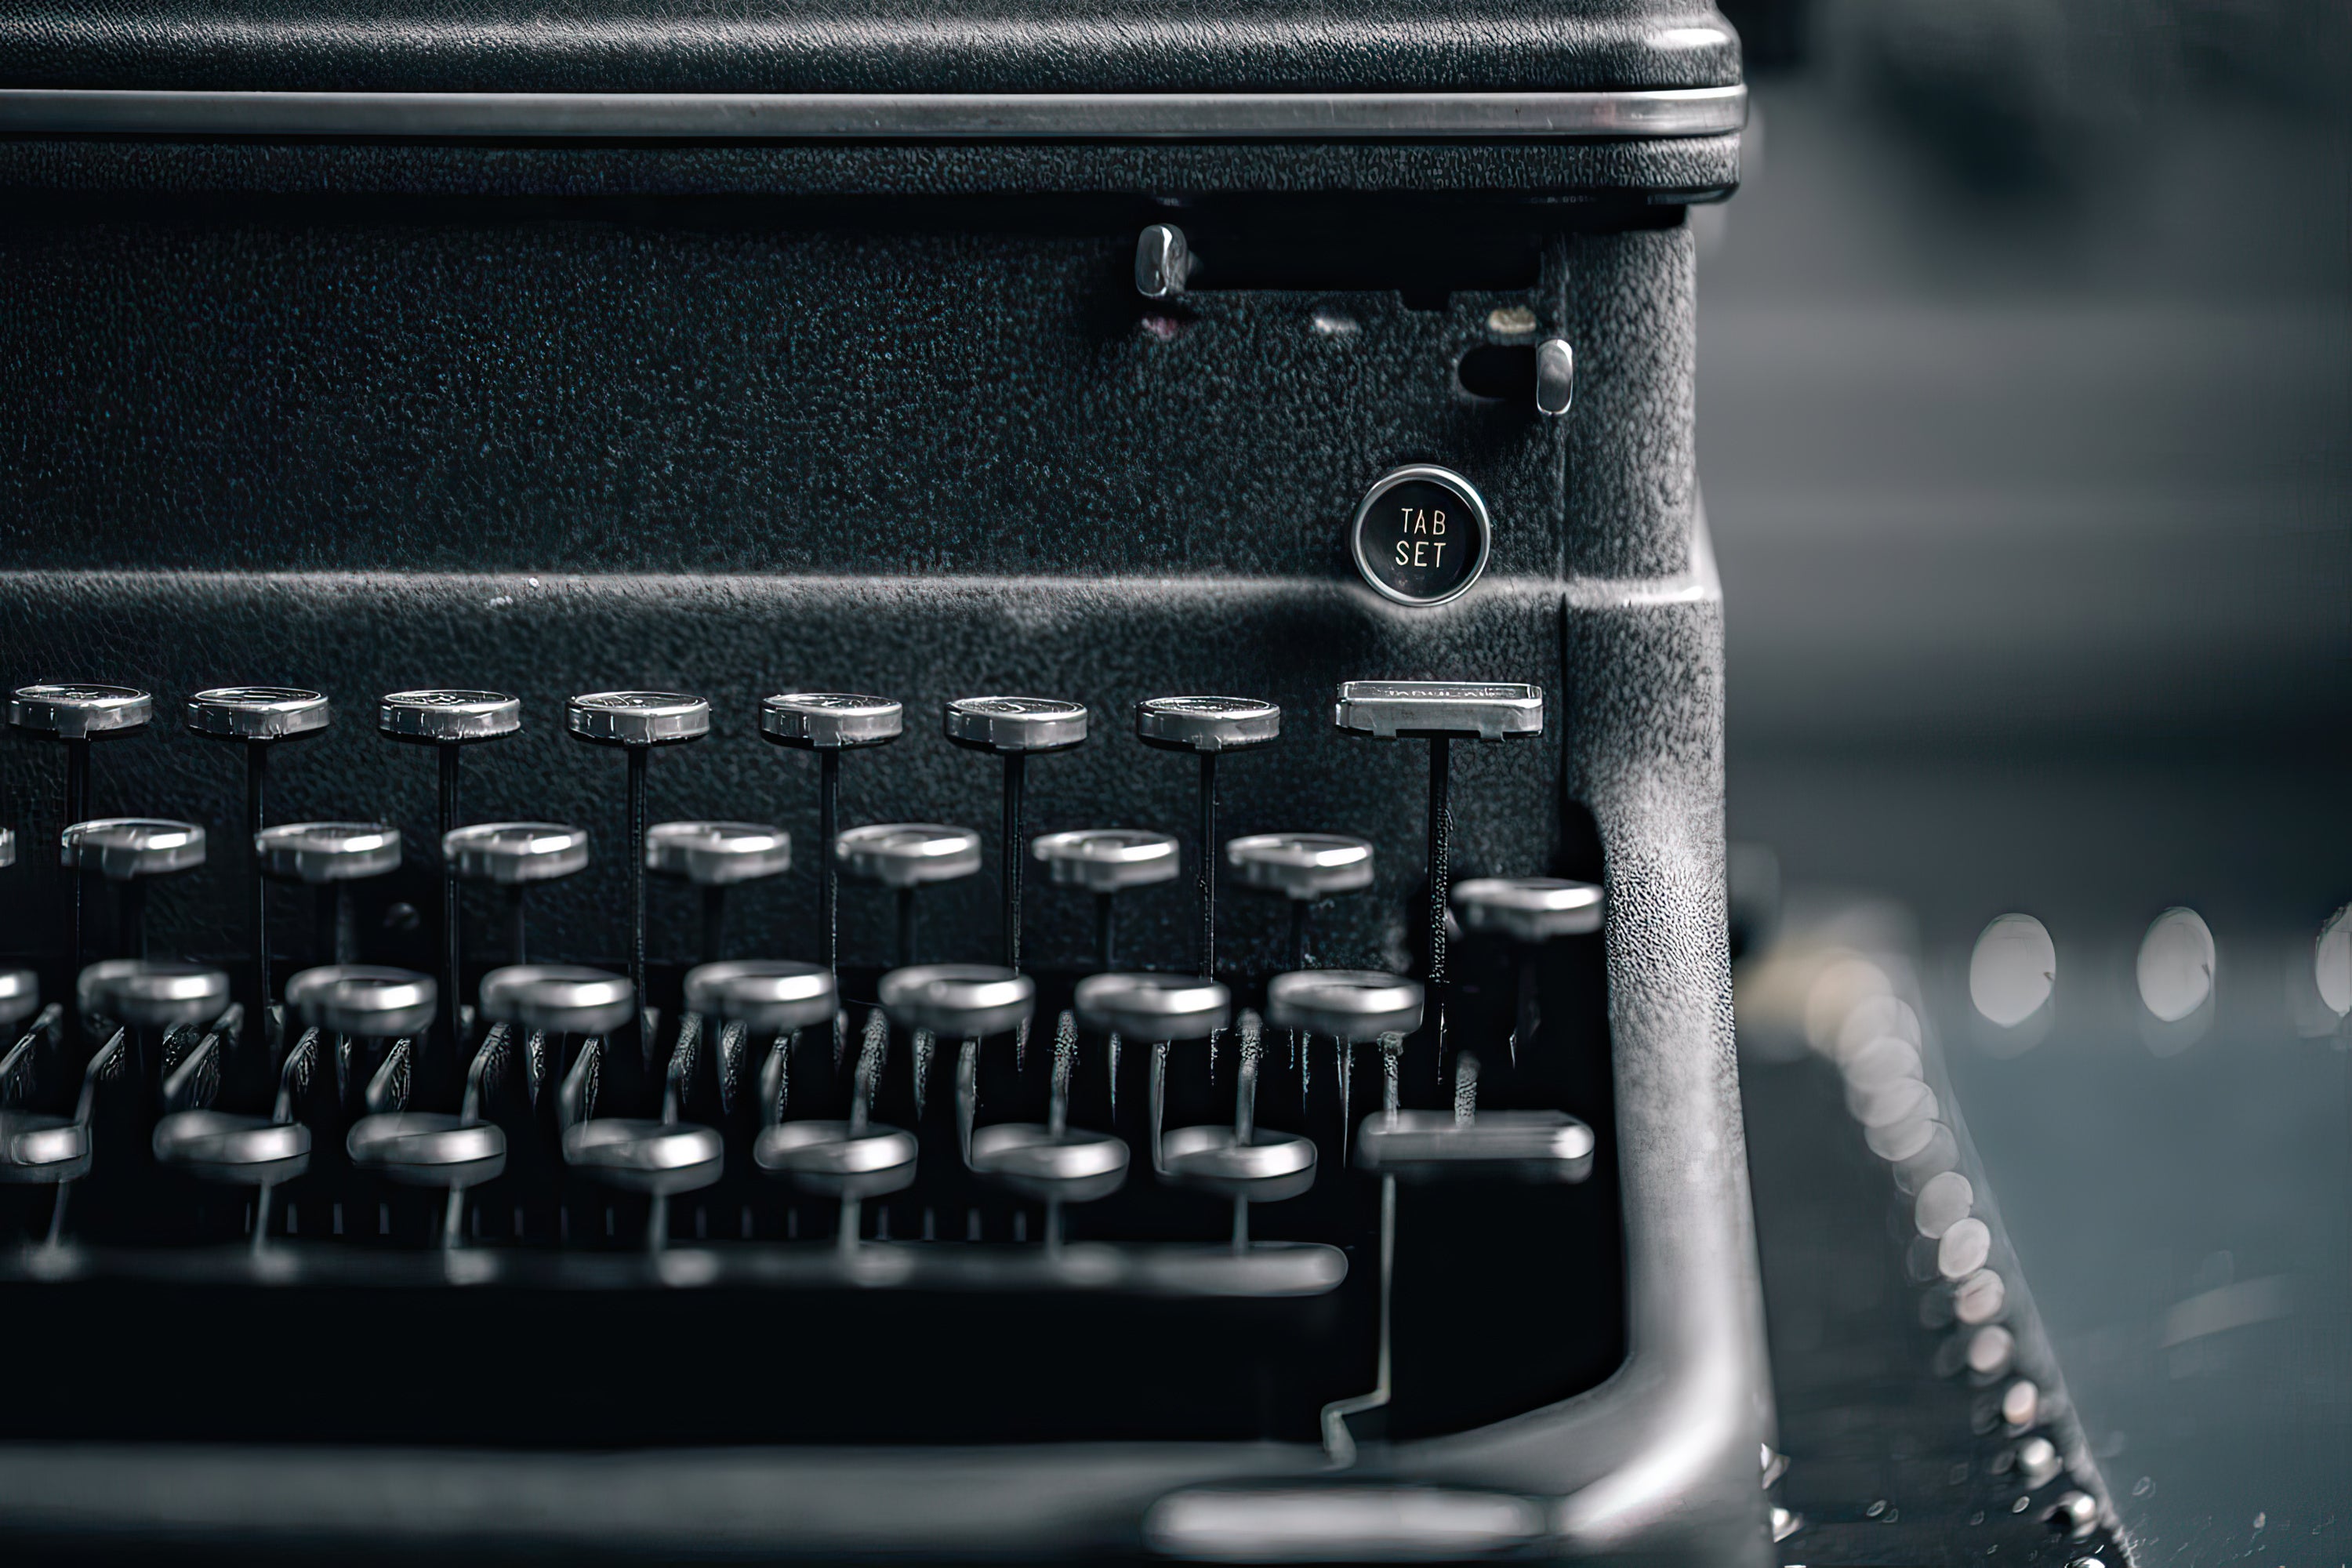 2023 True Story Showcase - Image of vintage typewriter